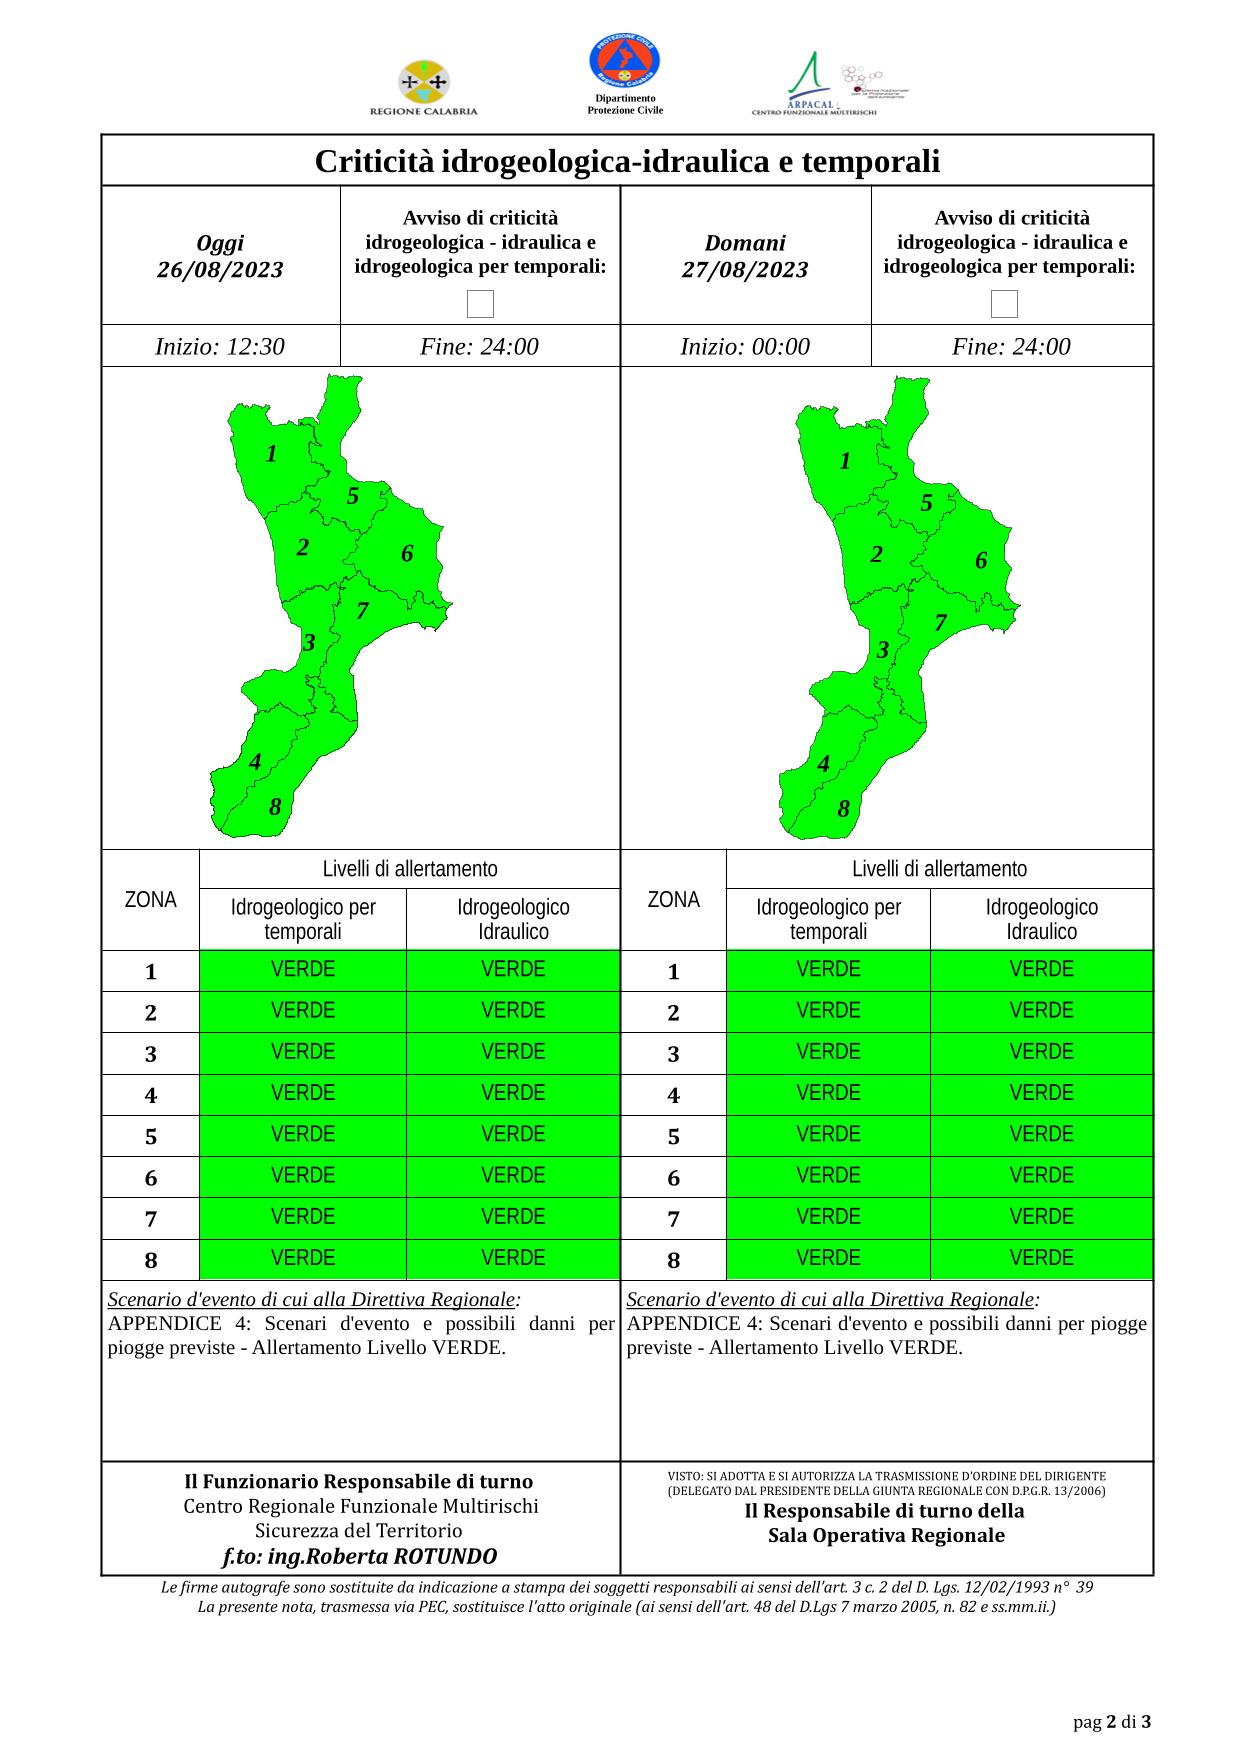 Criticità idrogeologica-idraulica e temporali in Calabria 26-08-2023